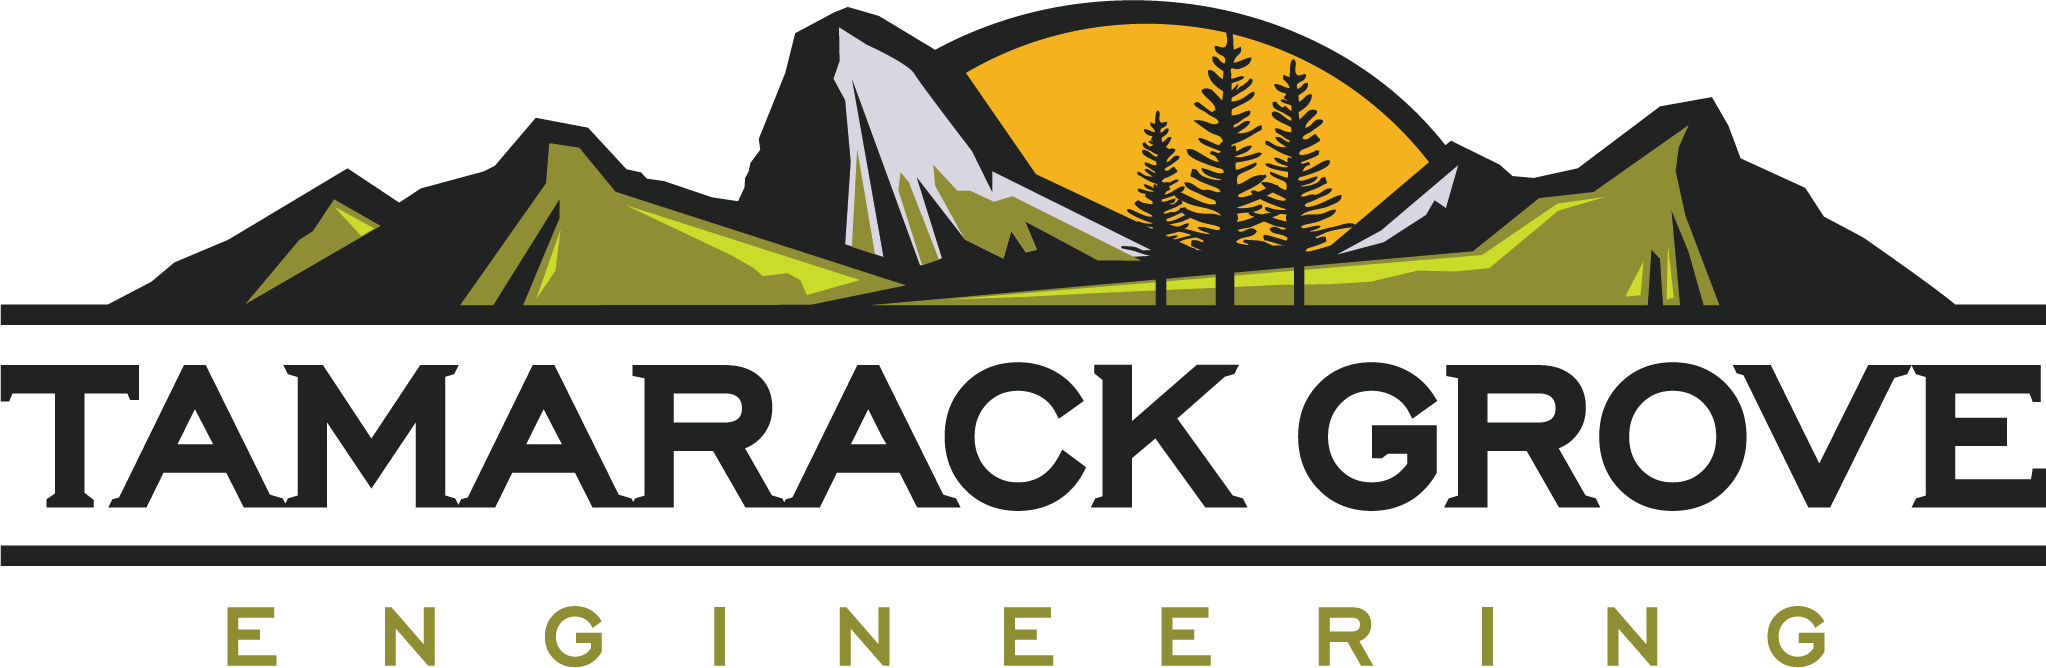 Tamarack Grove Engineering Company Logo